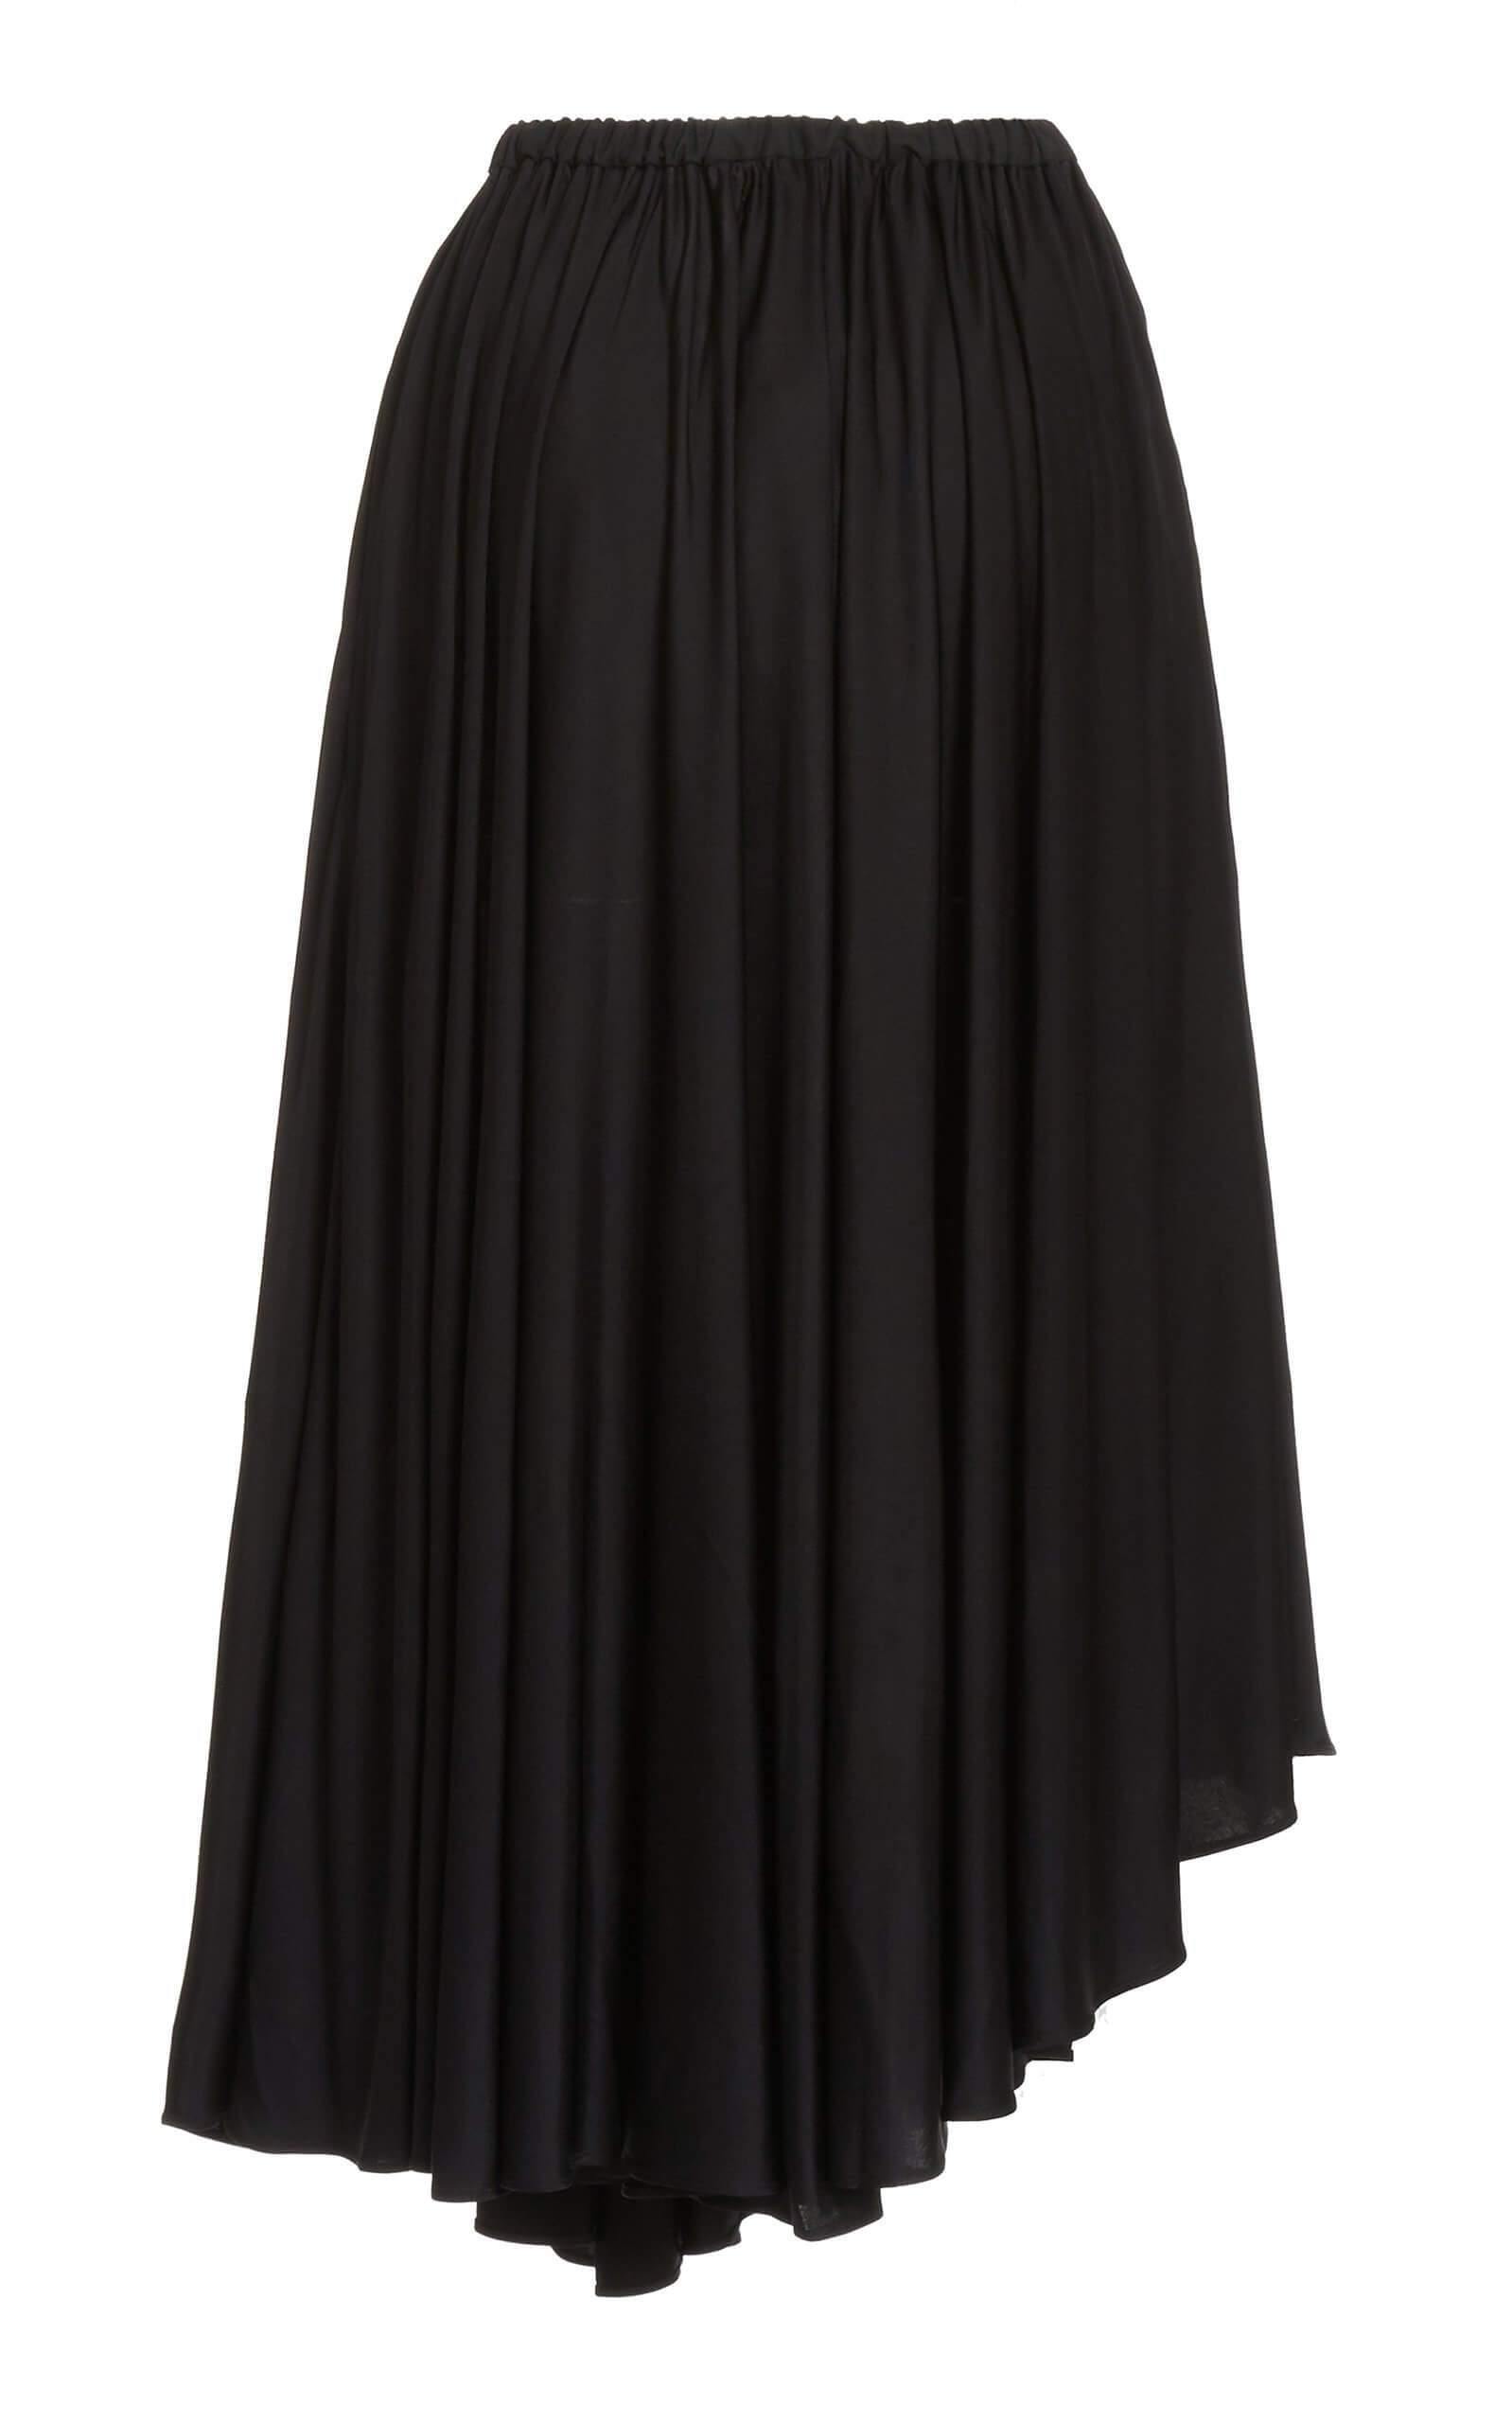 PROENZA SCHOULER WHITE LABEL Satin Jersey Pleated Skirt in Black | CLOSET Singapore